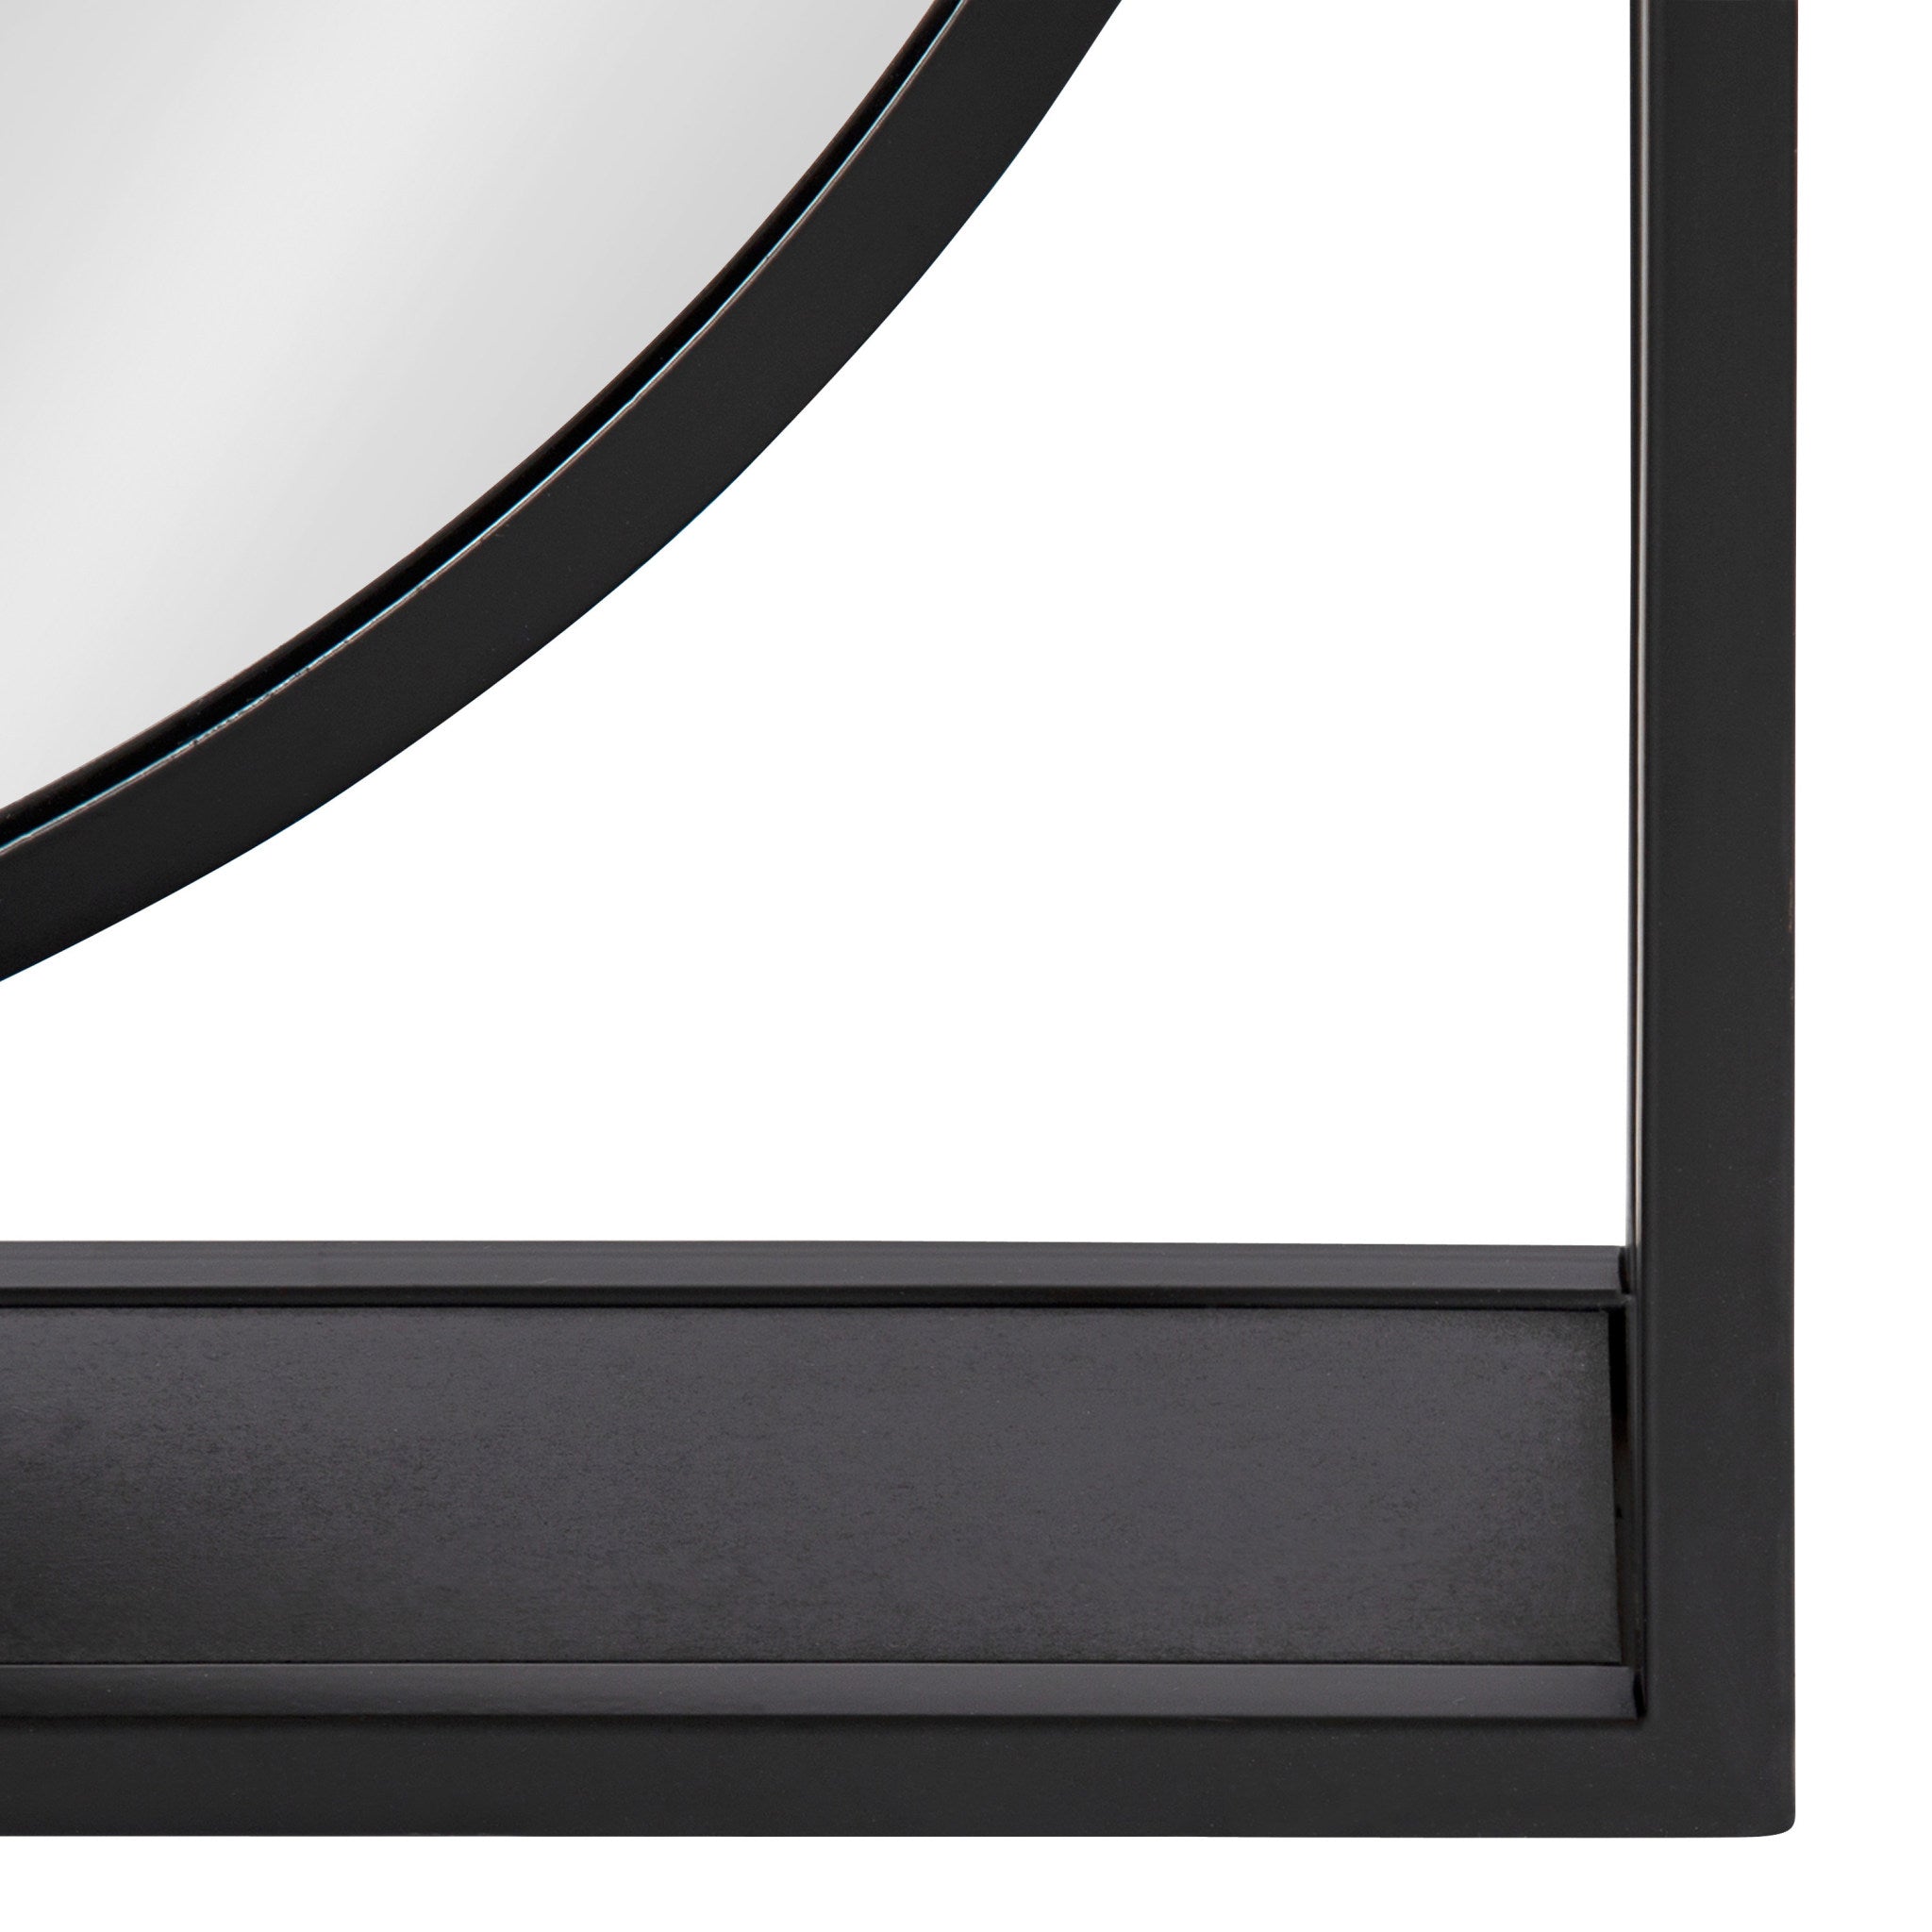 McCauley Decorative Metal Mirror with Shelf, Black 24x24